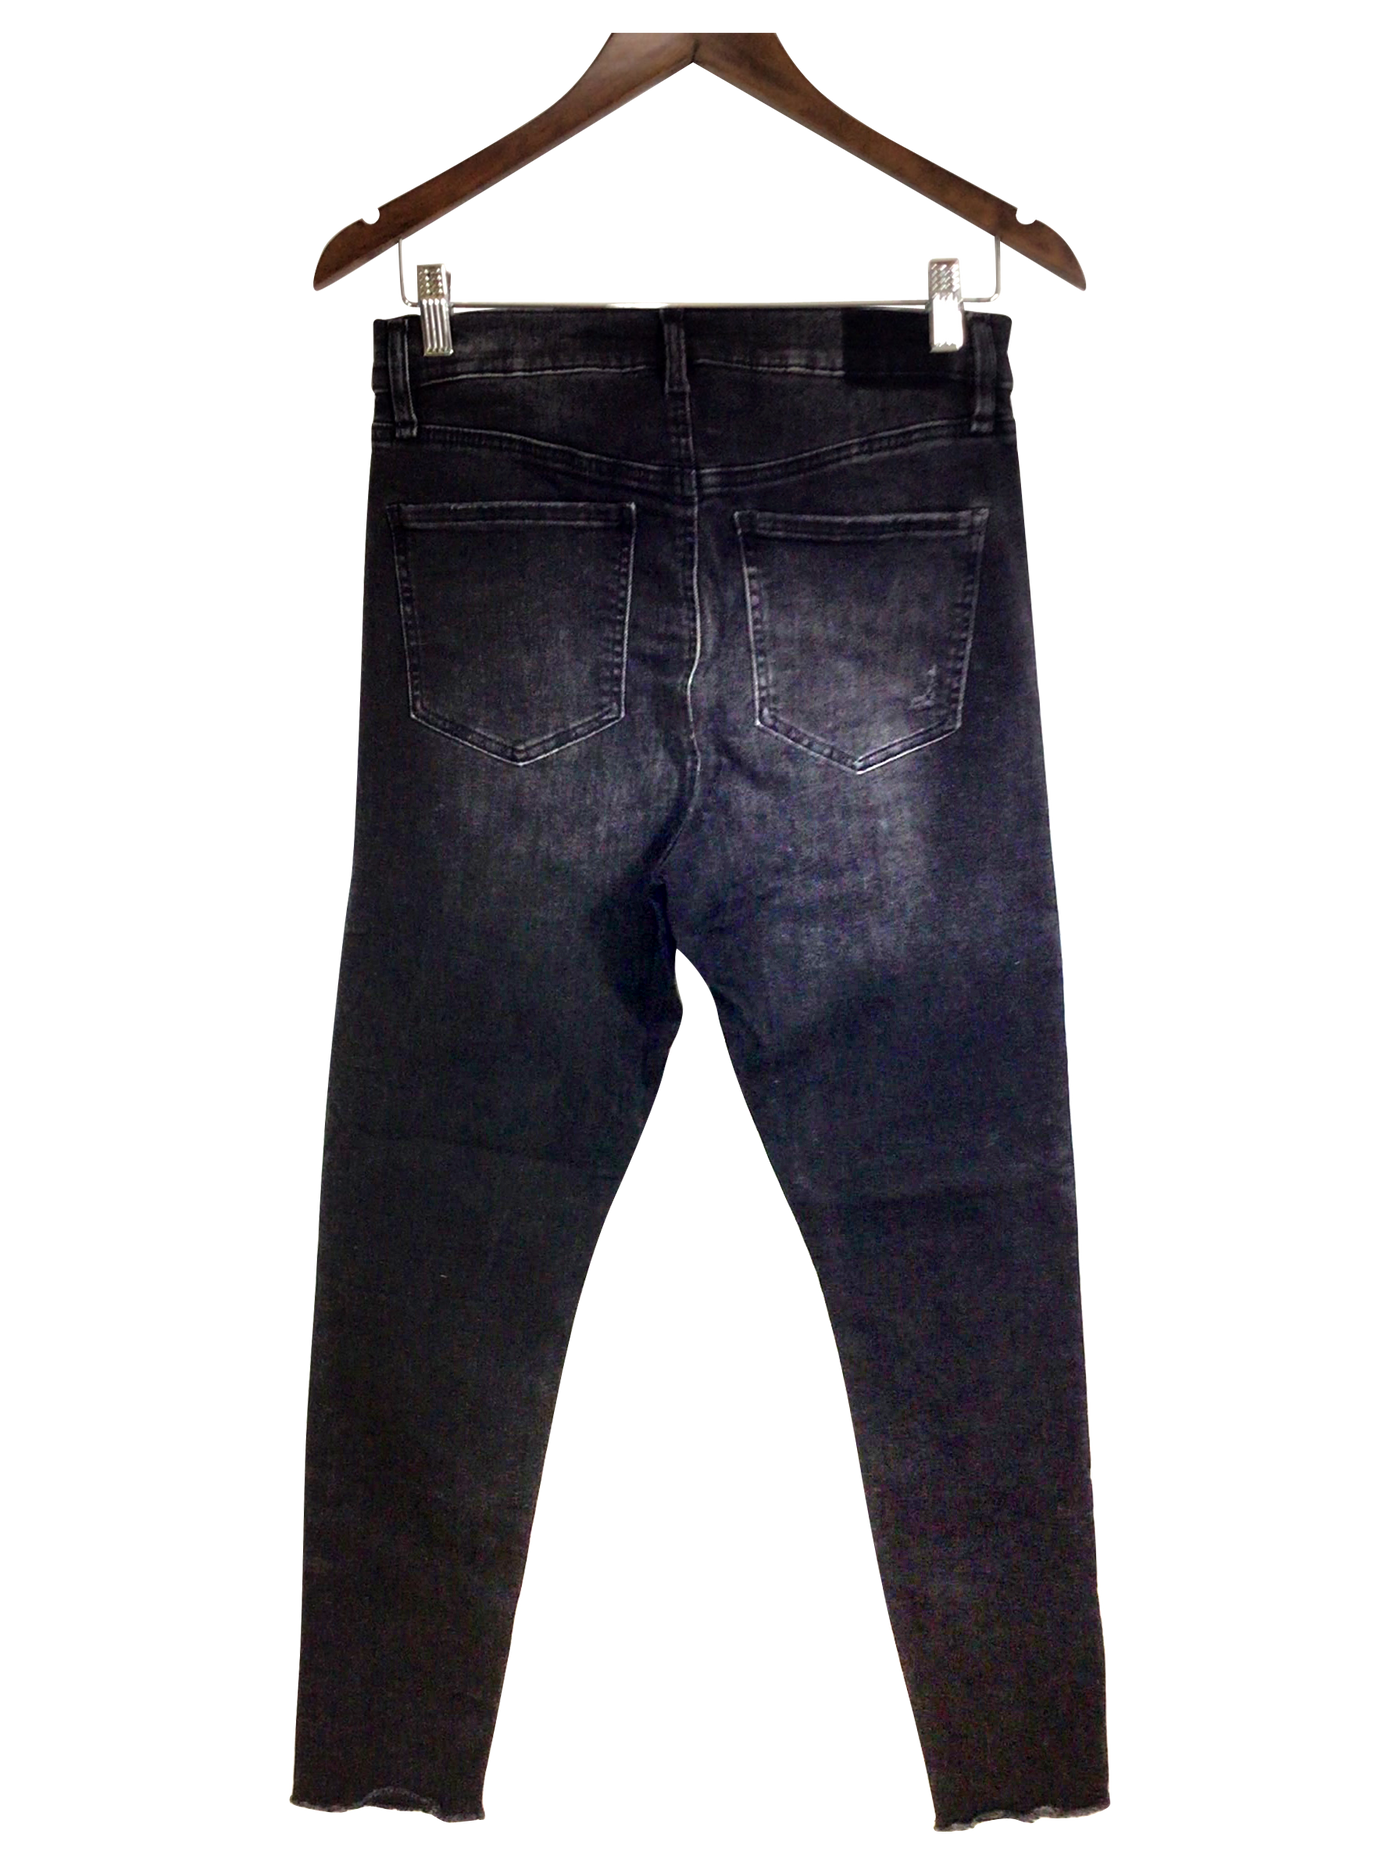 DYNAMITE Straight-legged Jeans Regular fit in Black - Size 29 | 13.45 $ KOOP